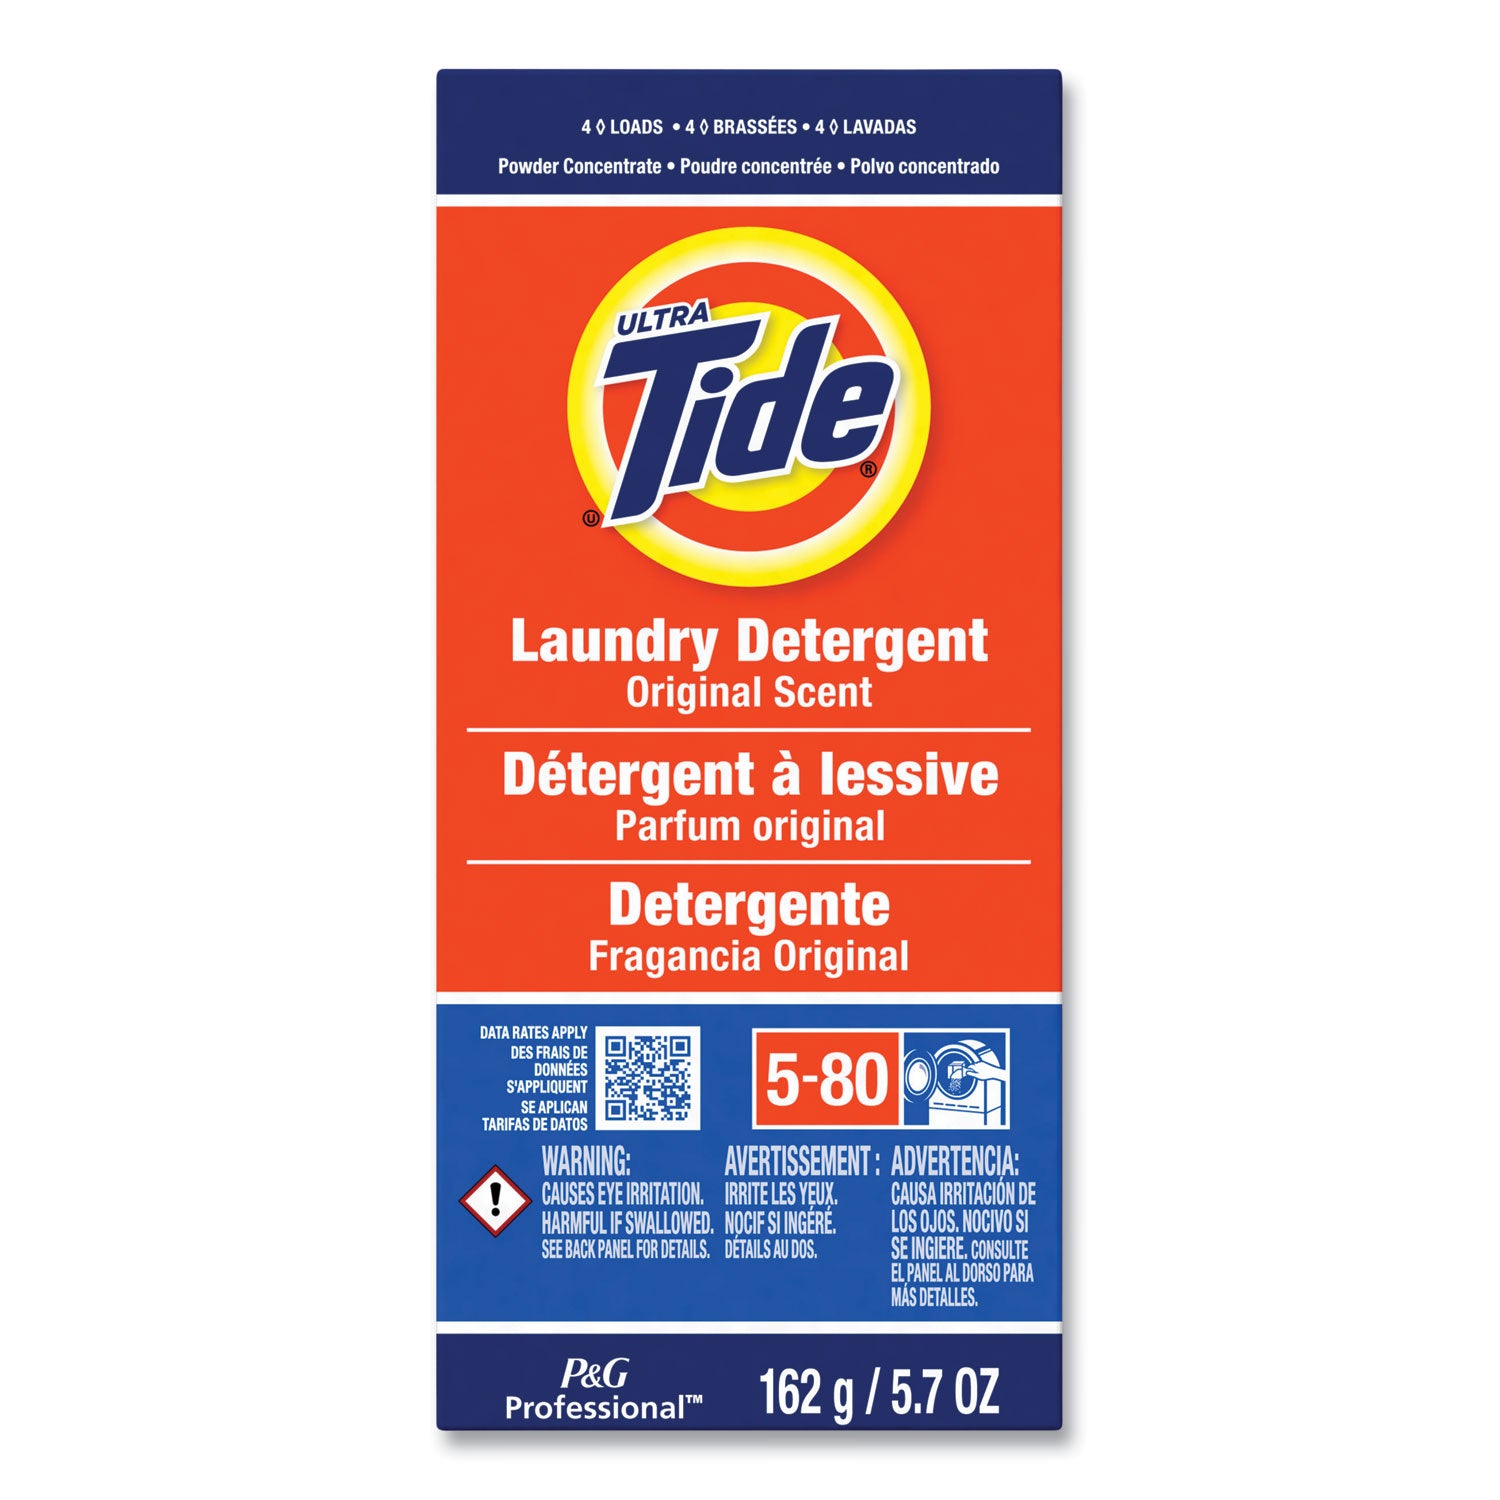 laundry-detergent-powder-57-oz-14-carton_pgc51042 - 1